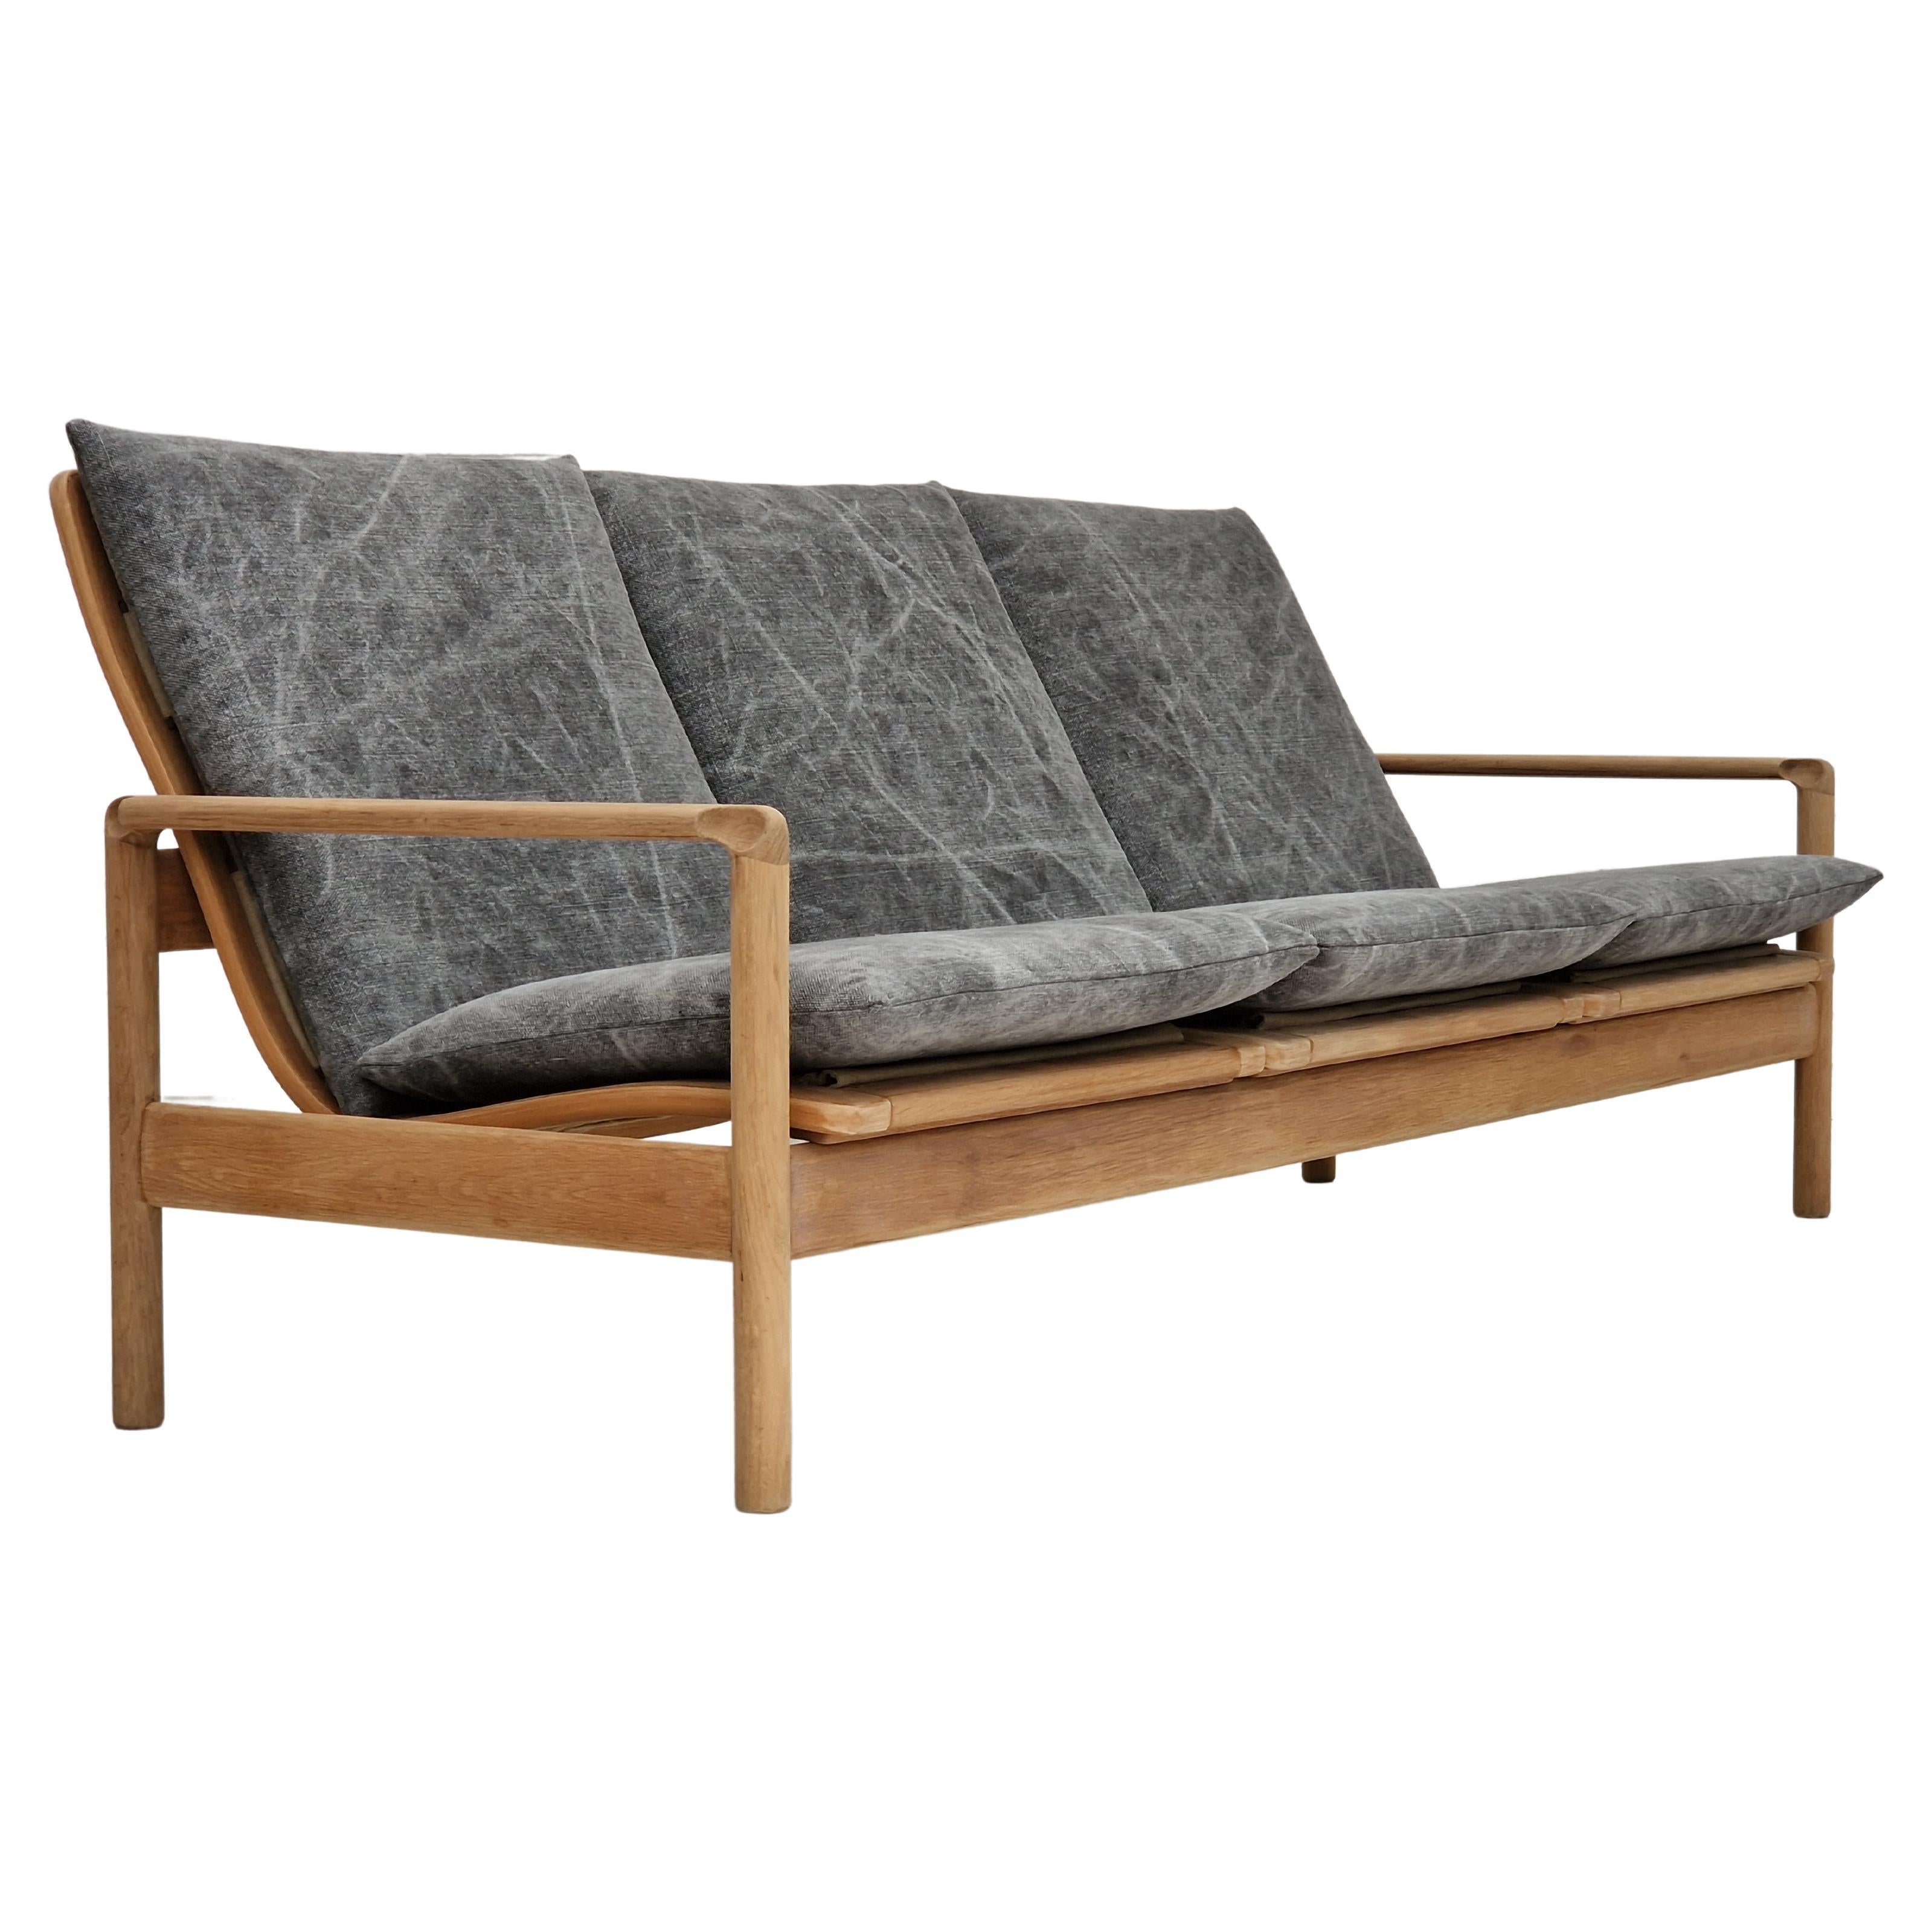 70s, Danish design, renovated 3 seater sofa, linen furniture fabric, oak wood For Sale